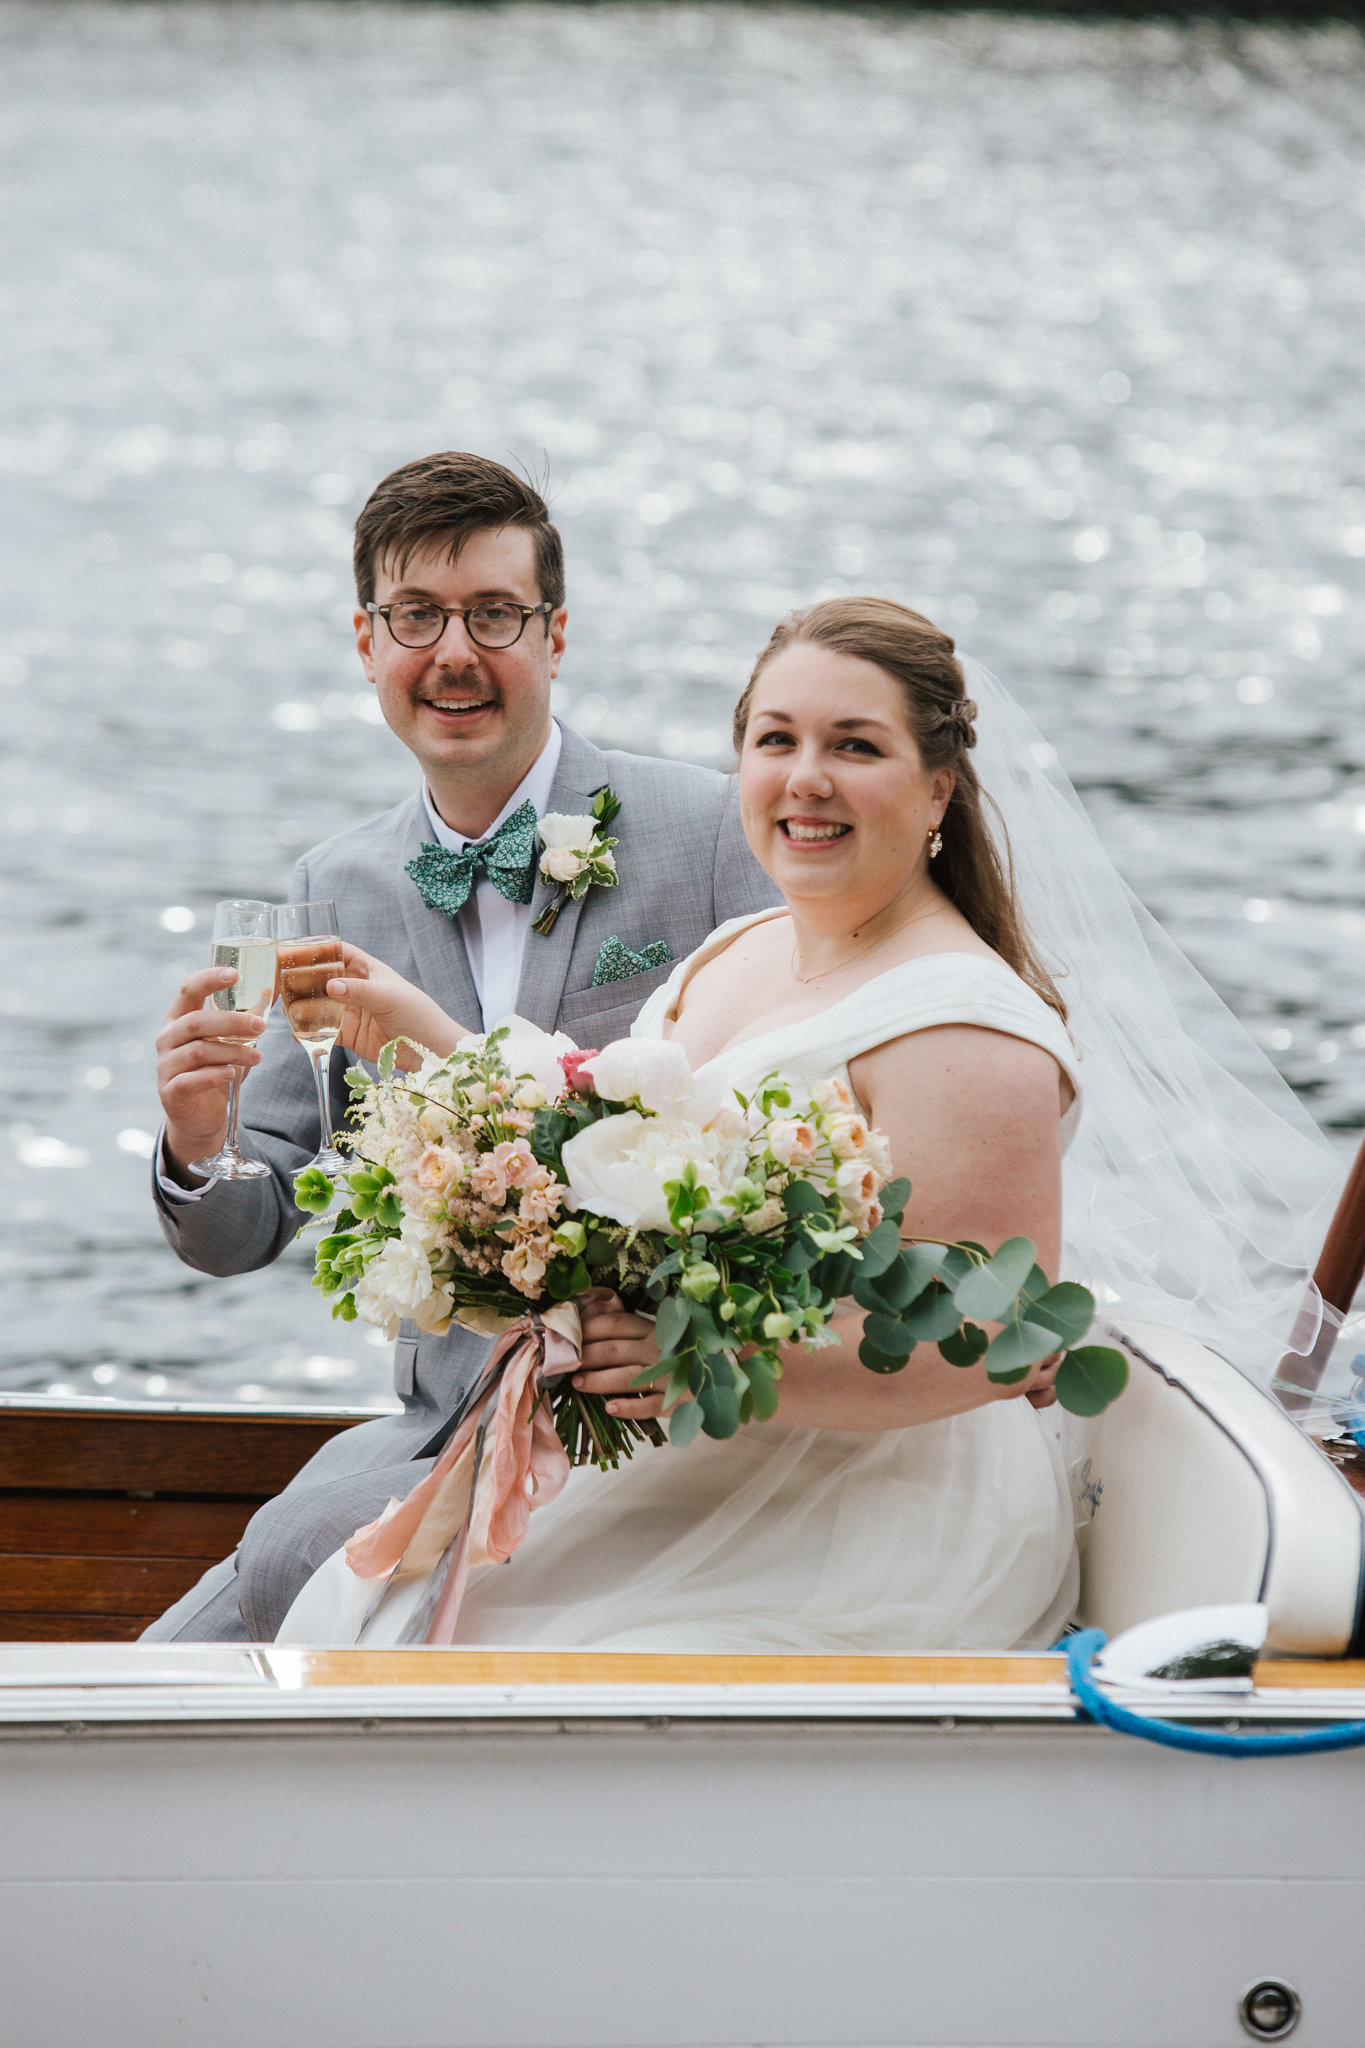 Sebago Lake Maine wedding officiant: A Sweet Start